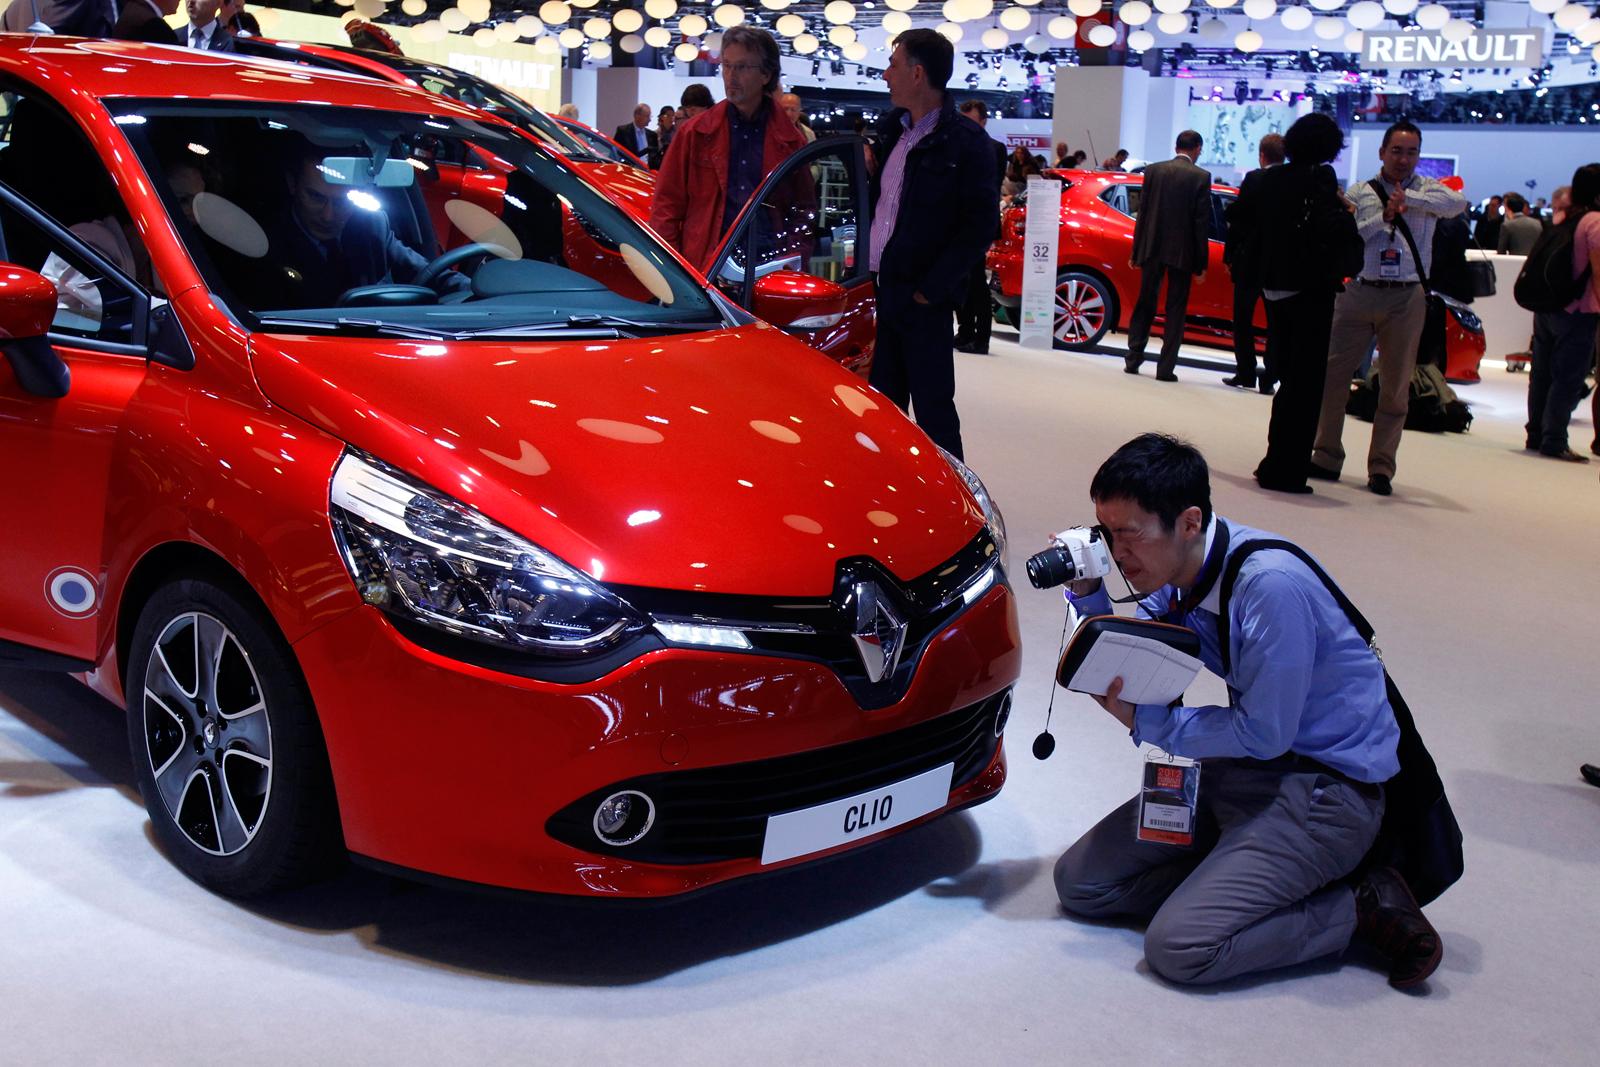 Renault Clio inspekteras noga. Foto: SCANPIX